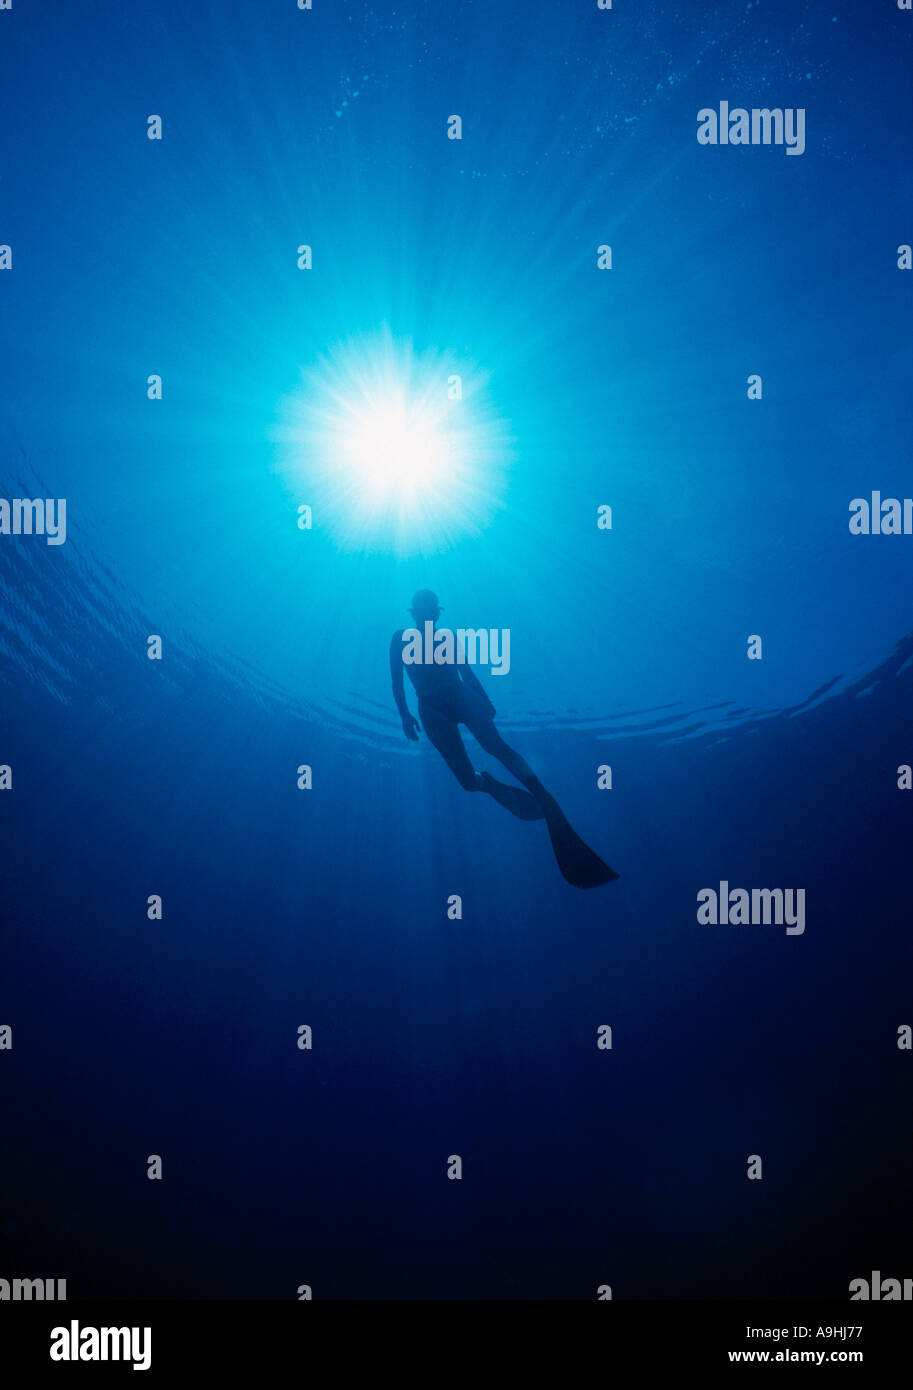 Diver silhouette underwater Stock Photo